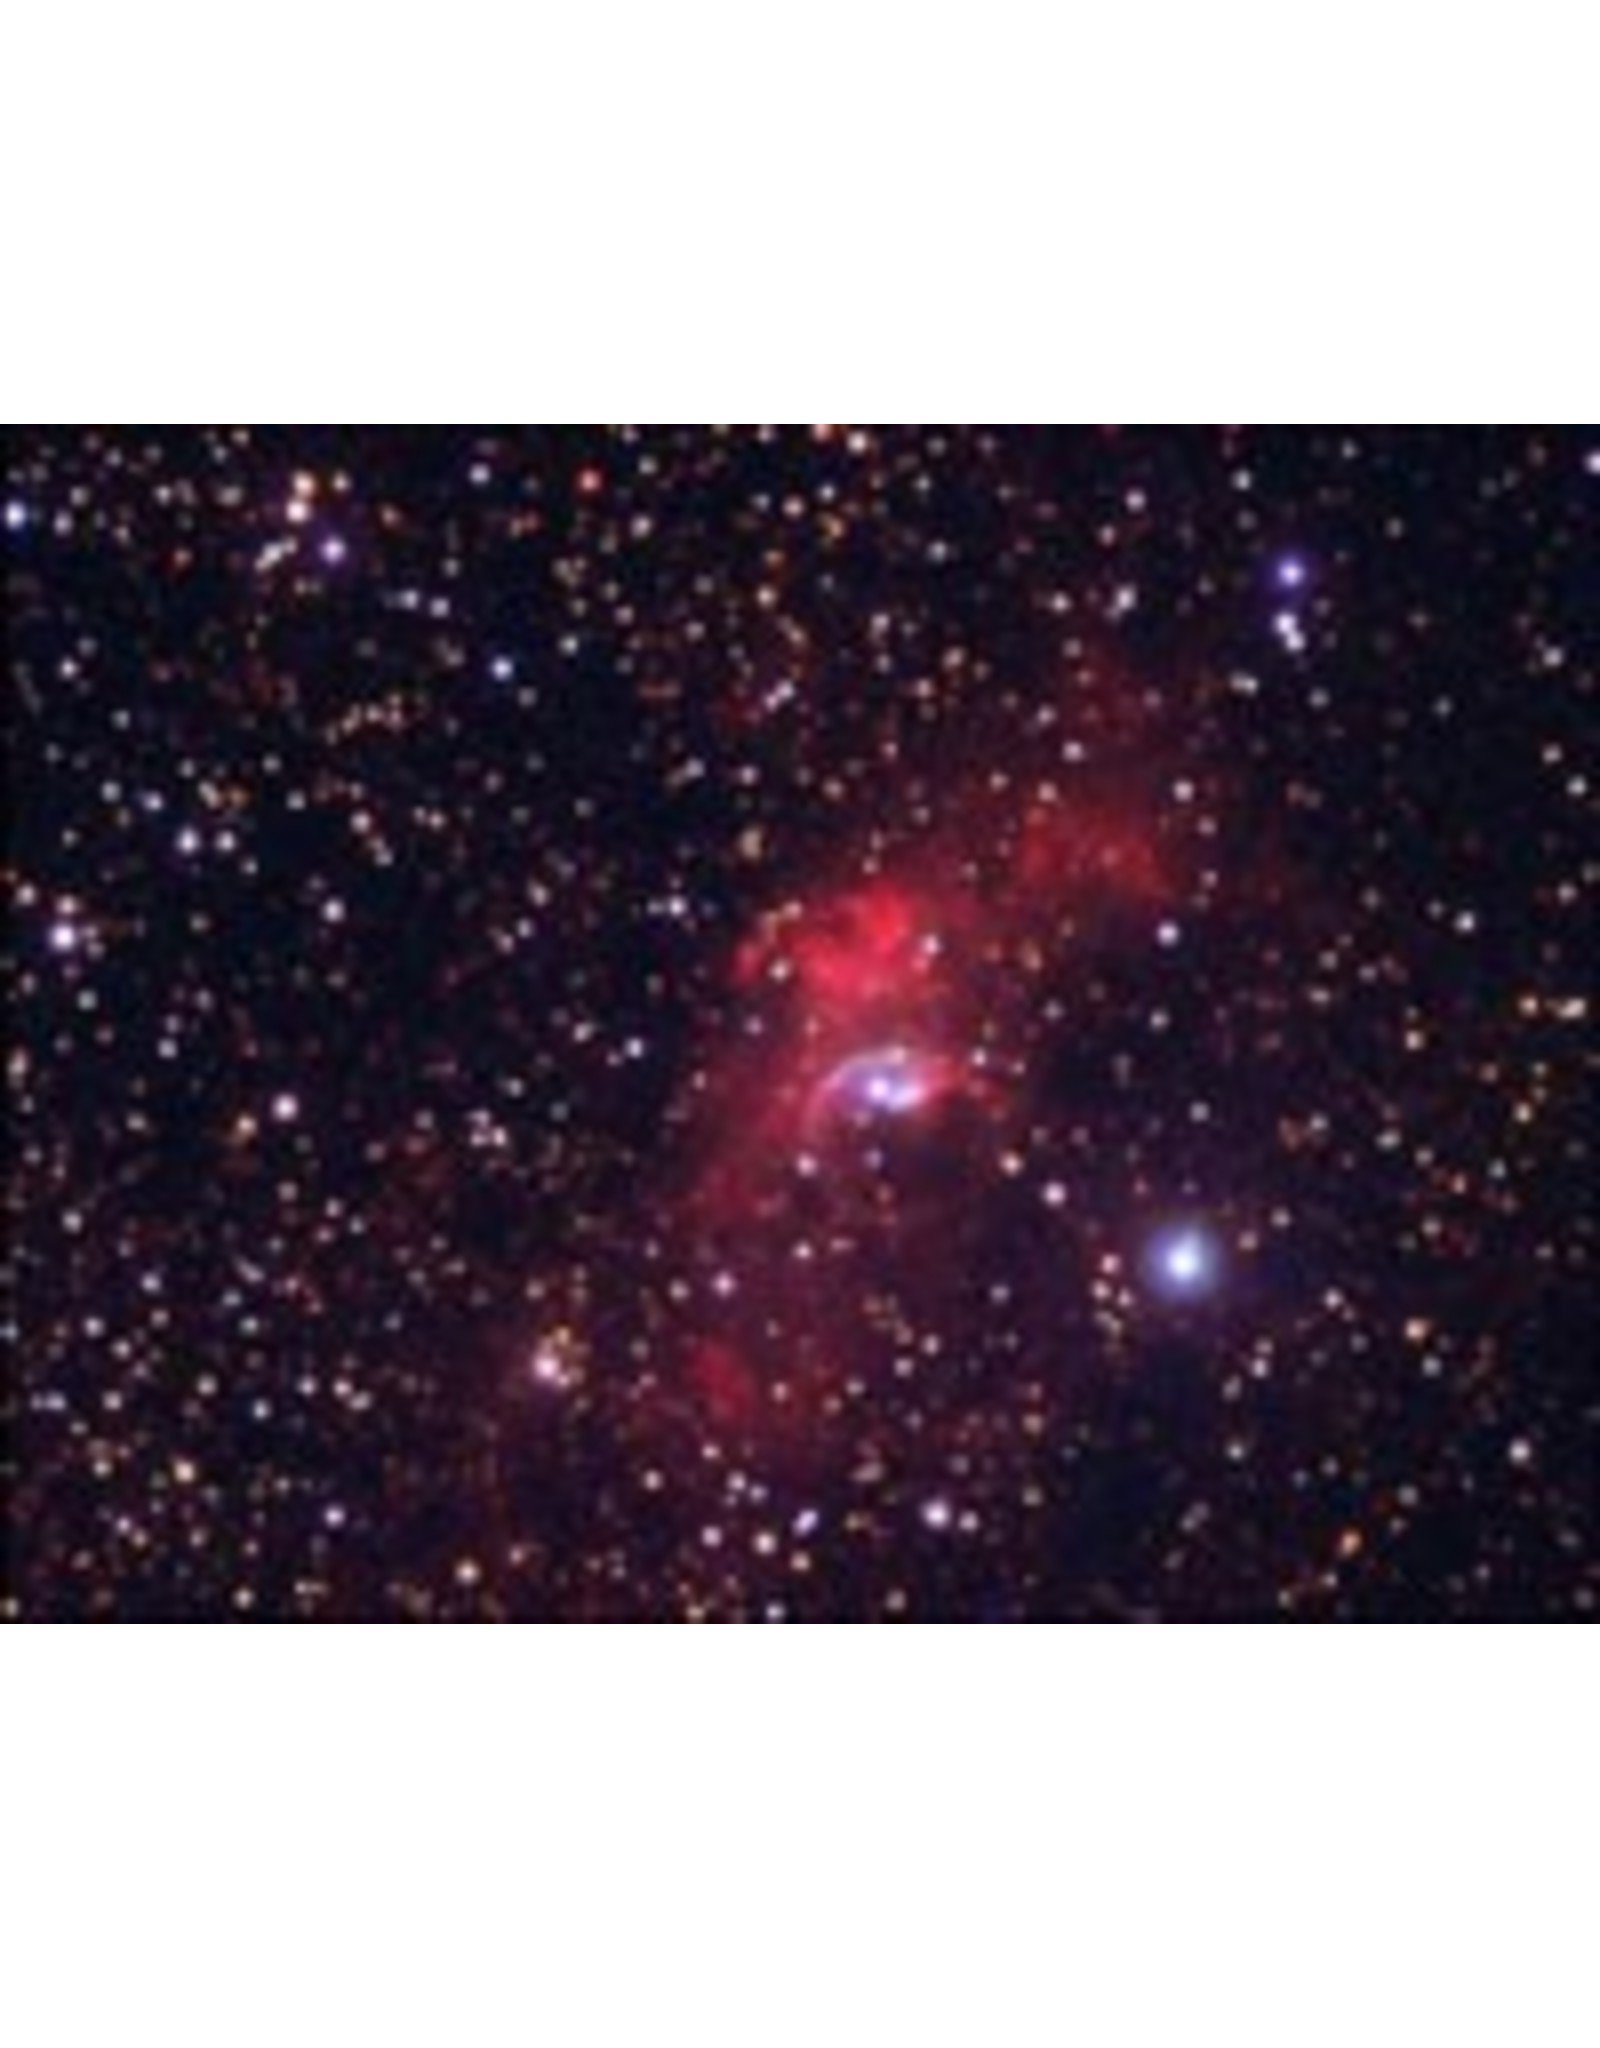 Tele vue TV85 APO Telescope - Evergreen OTA